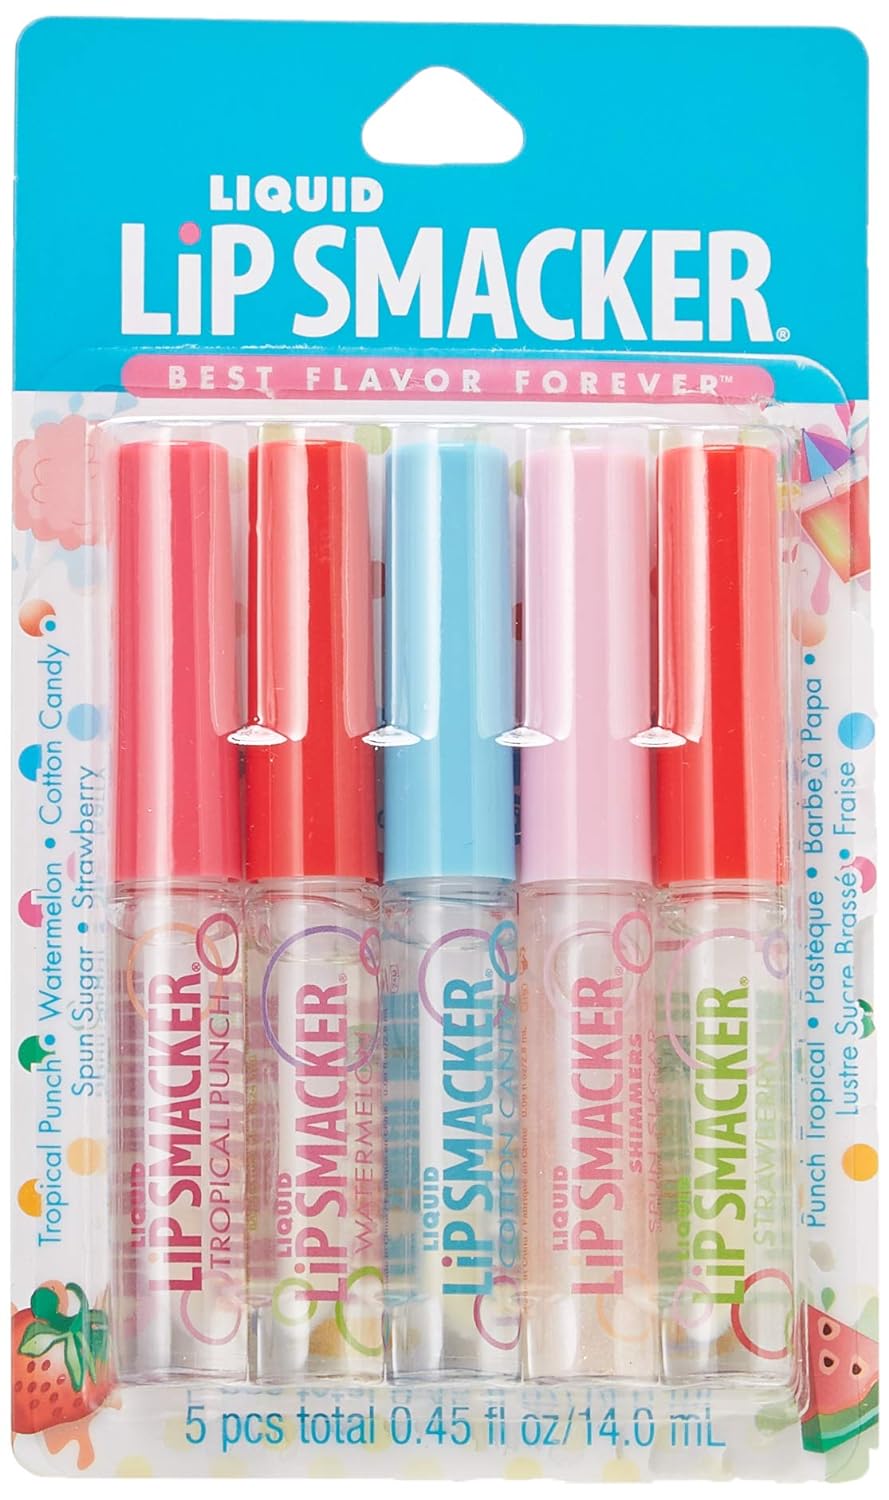 Lip Smacker Liquid Flavored Lip Gloss Friendship Pack |Tropical Punch, Watermelon, Cotton Candy, Sugar, Strawberry | Stocking Stuffer | Christmas Gift, Set of 5